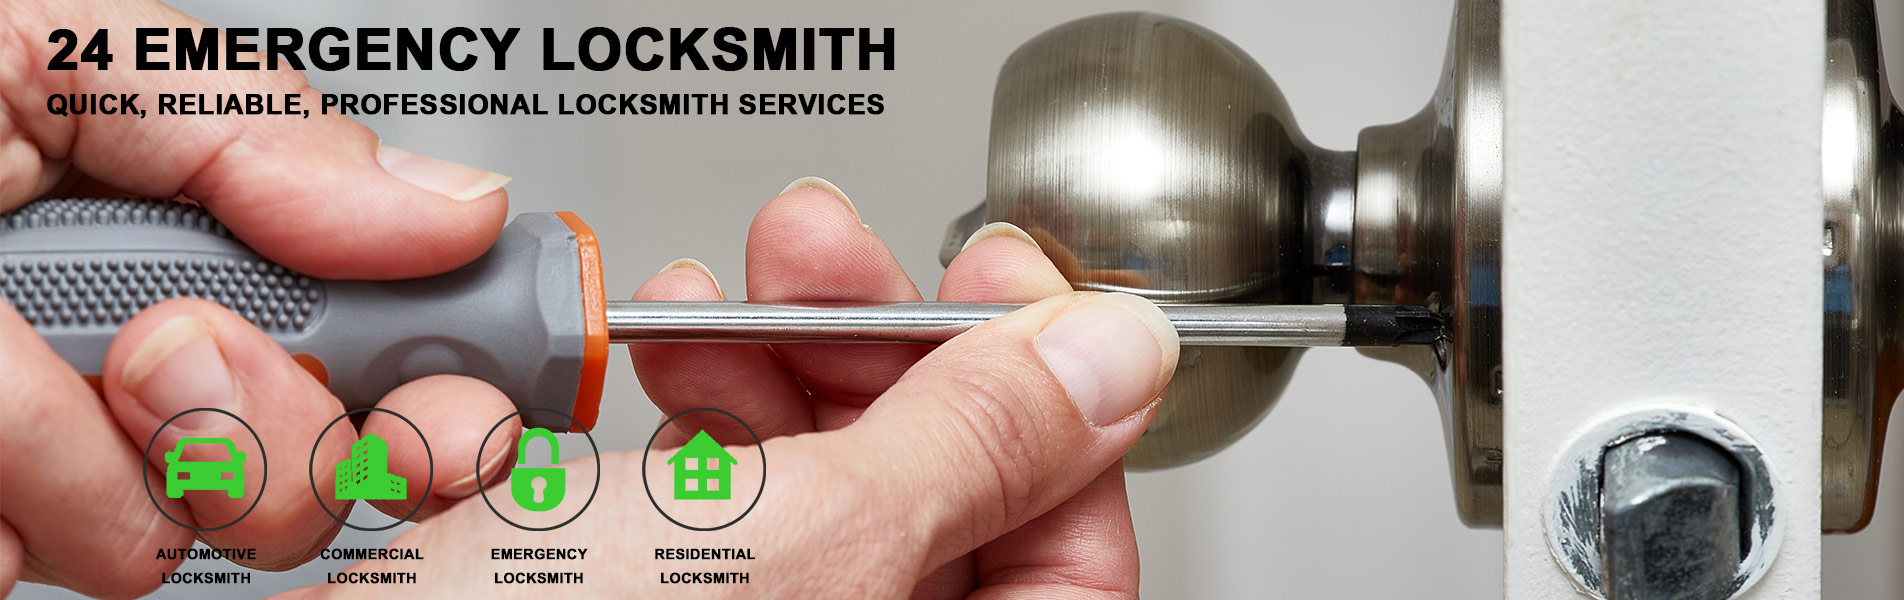 Expert Locksmith Services Vancouver, WA (866) 234-3152